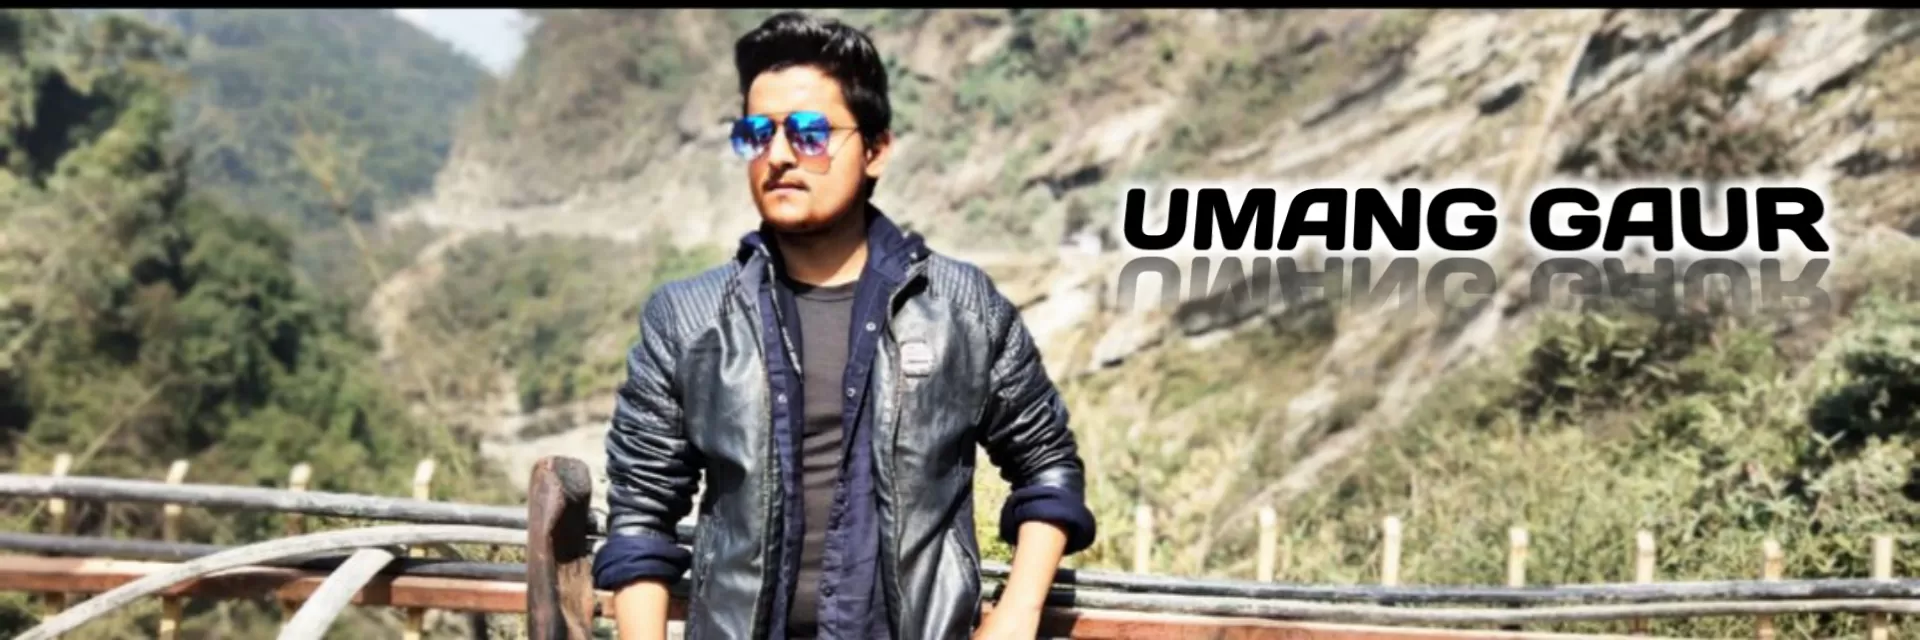 Cover Image of Umang Gaur